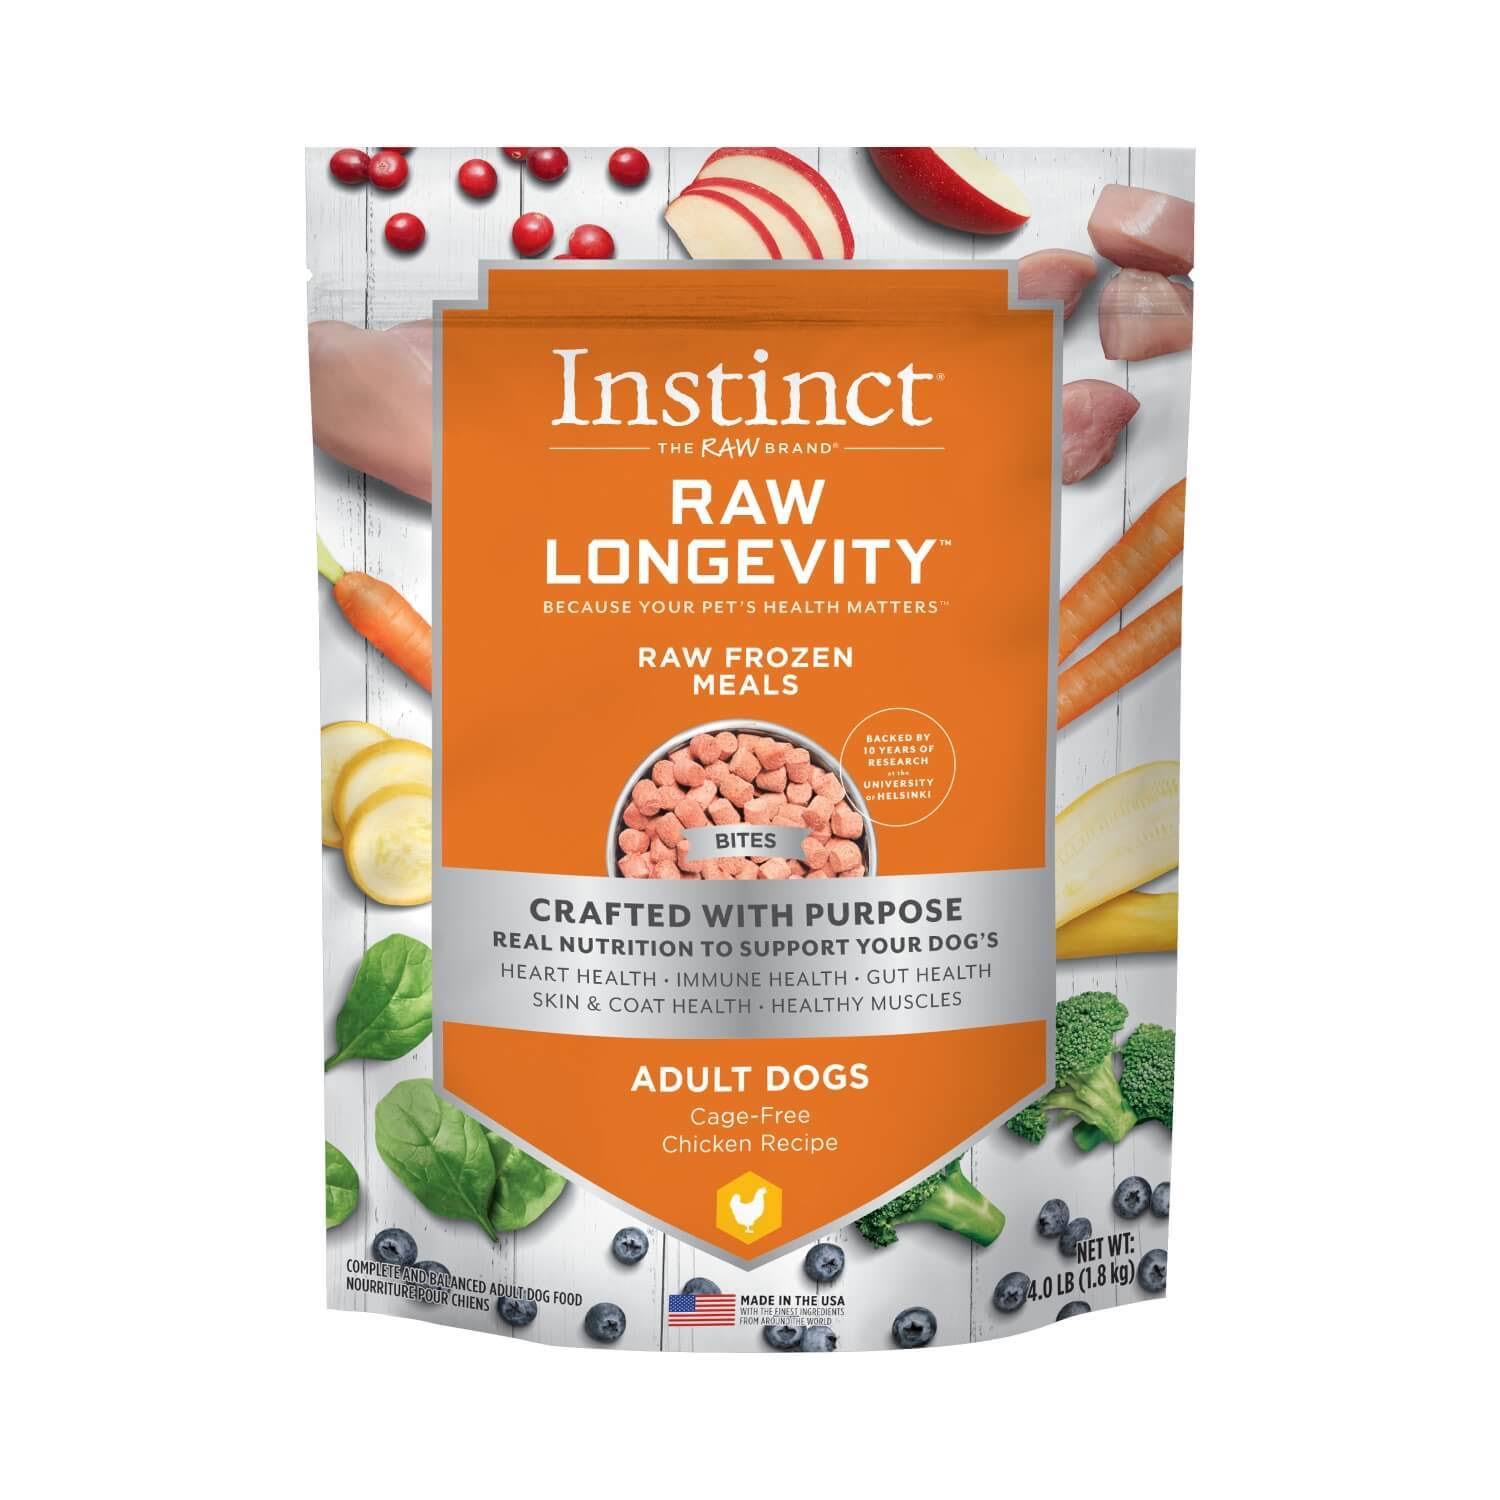 Instinct Raw Longevity Patties Cage-Free Chicken Frozen Dog Food, 6-lb